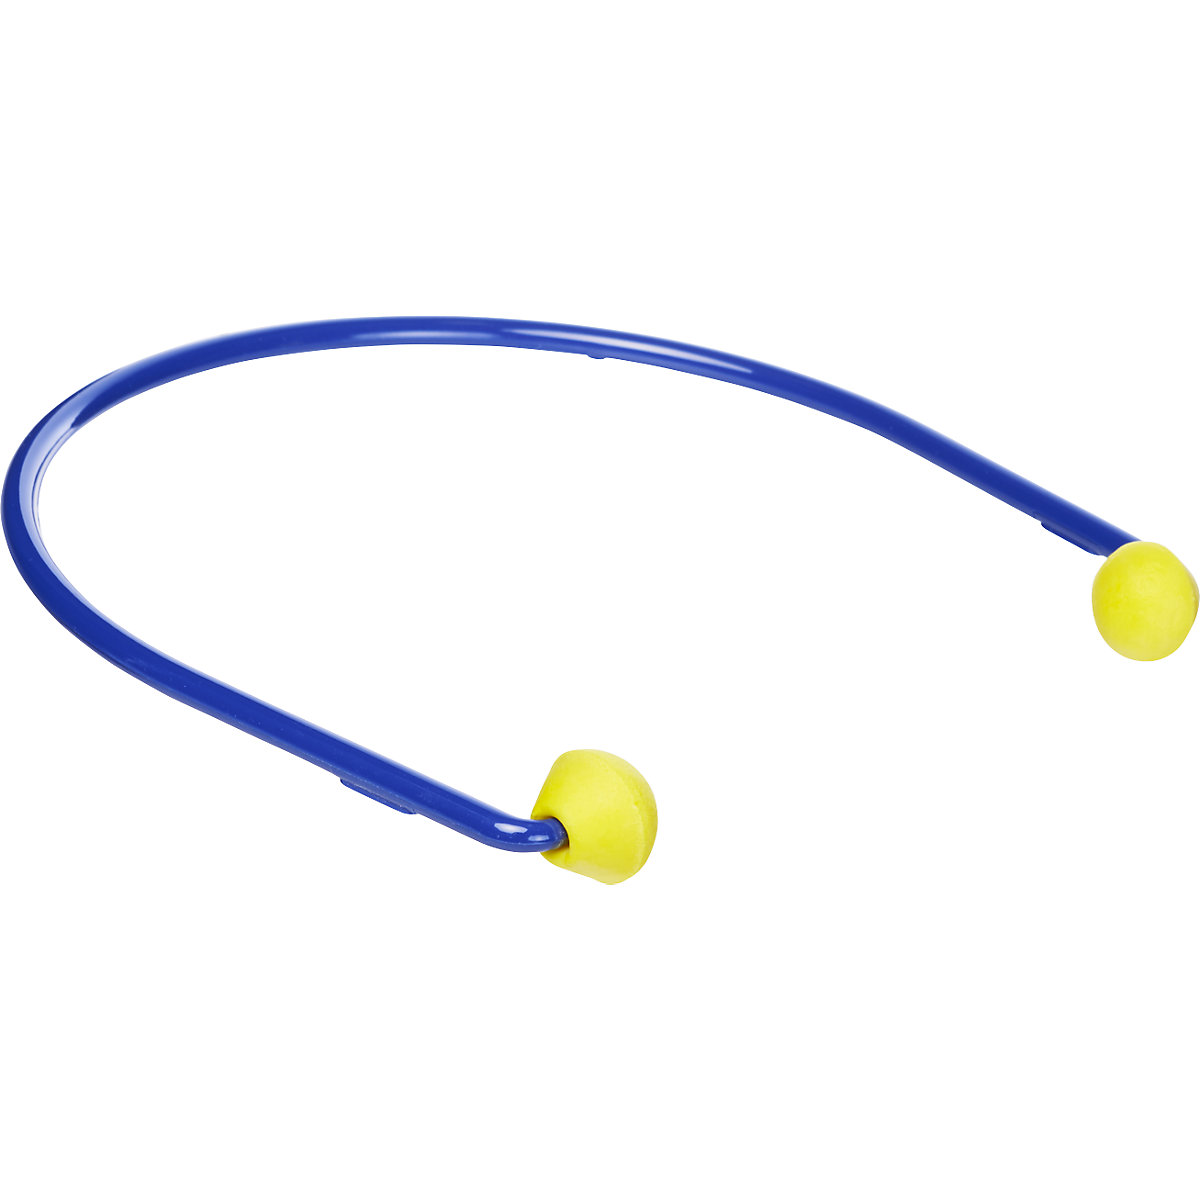 E-A-Rcaps™ banded earplugs – 3M (Product illustration 3)-2